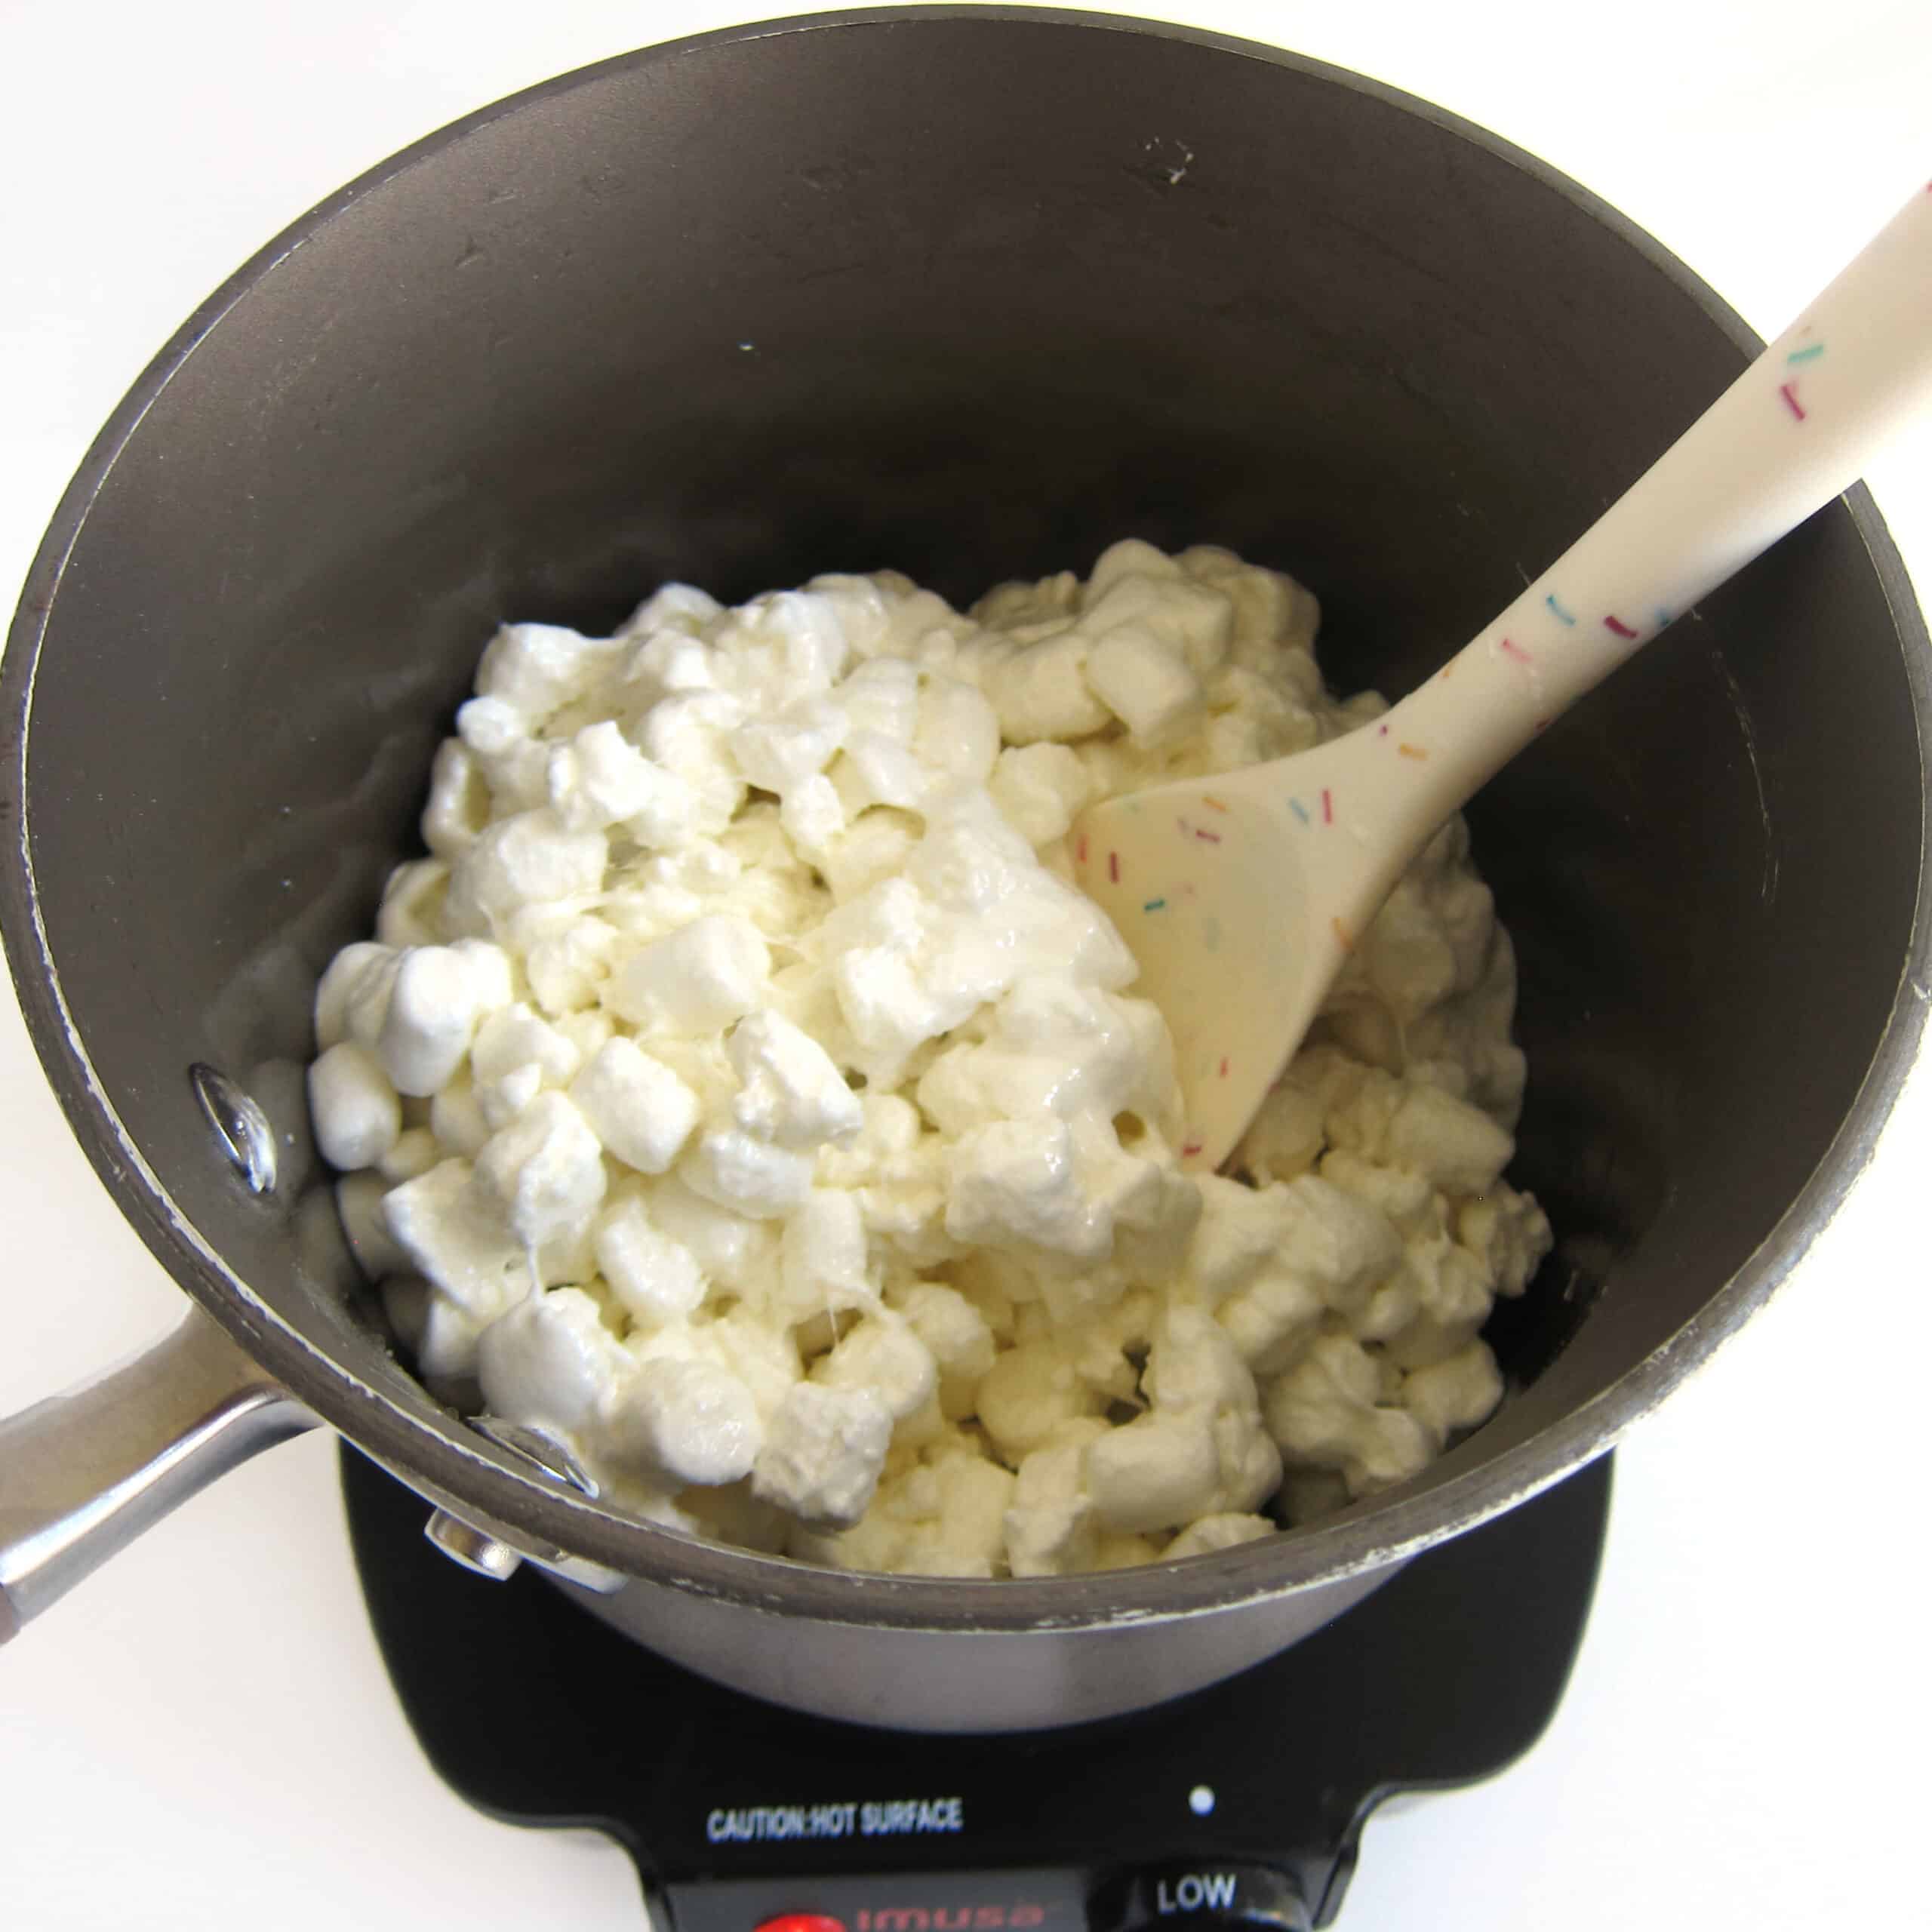 Melting mini marshmallows and coconut oil in a non-stick saucepan.